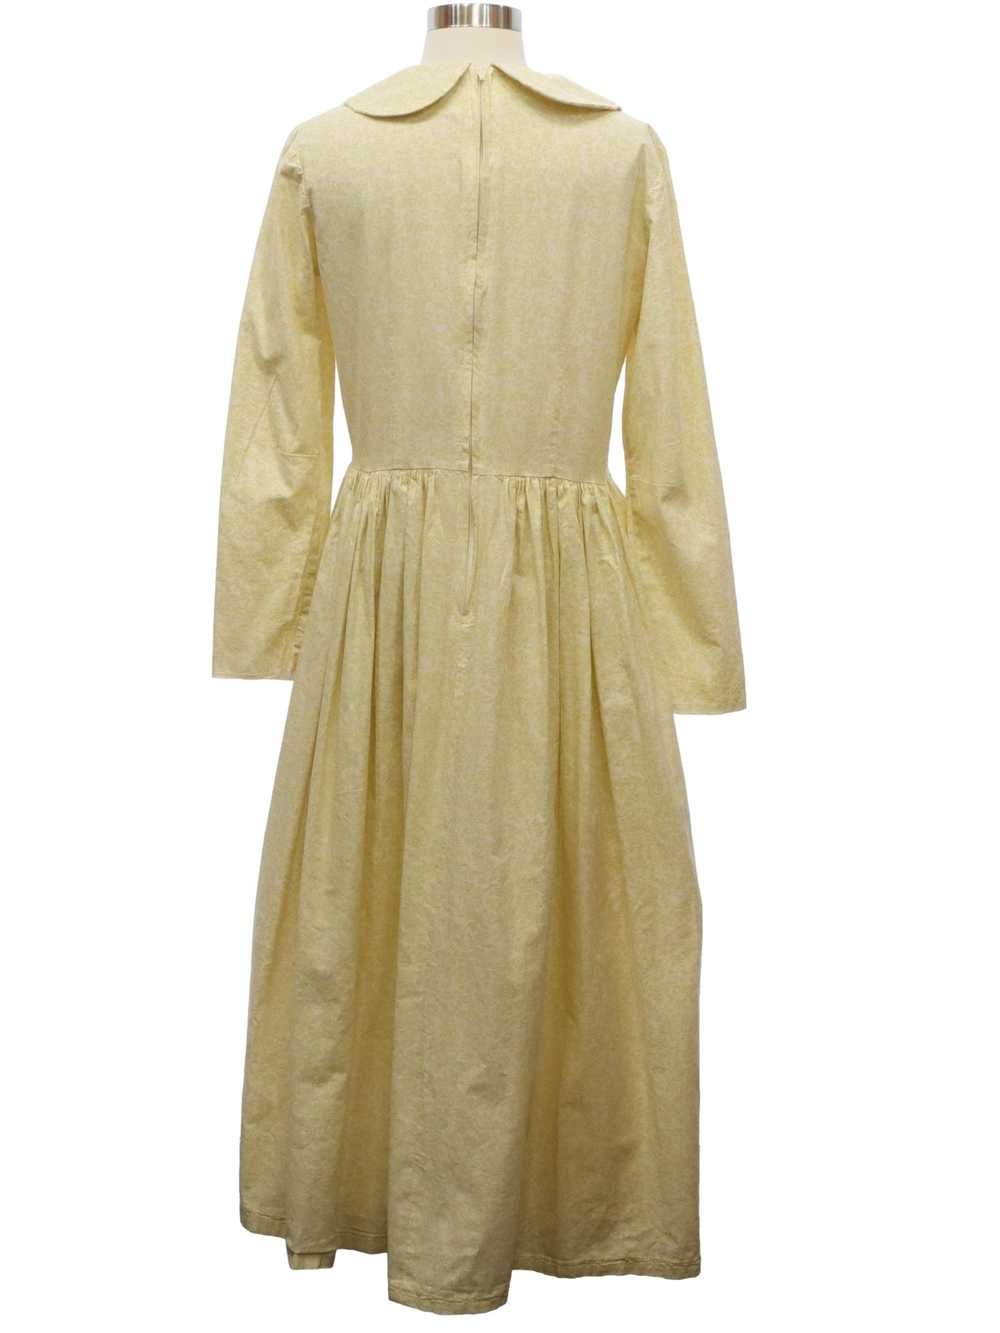 1980's Prairie Dress - image 3